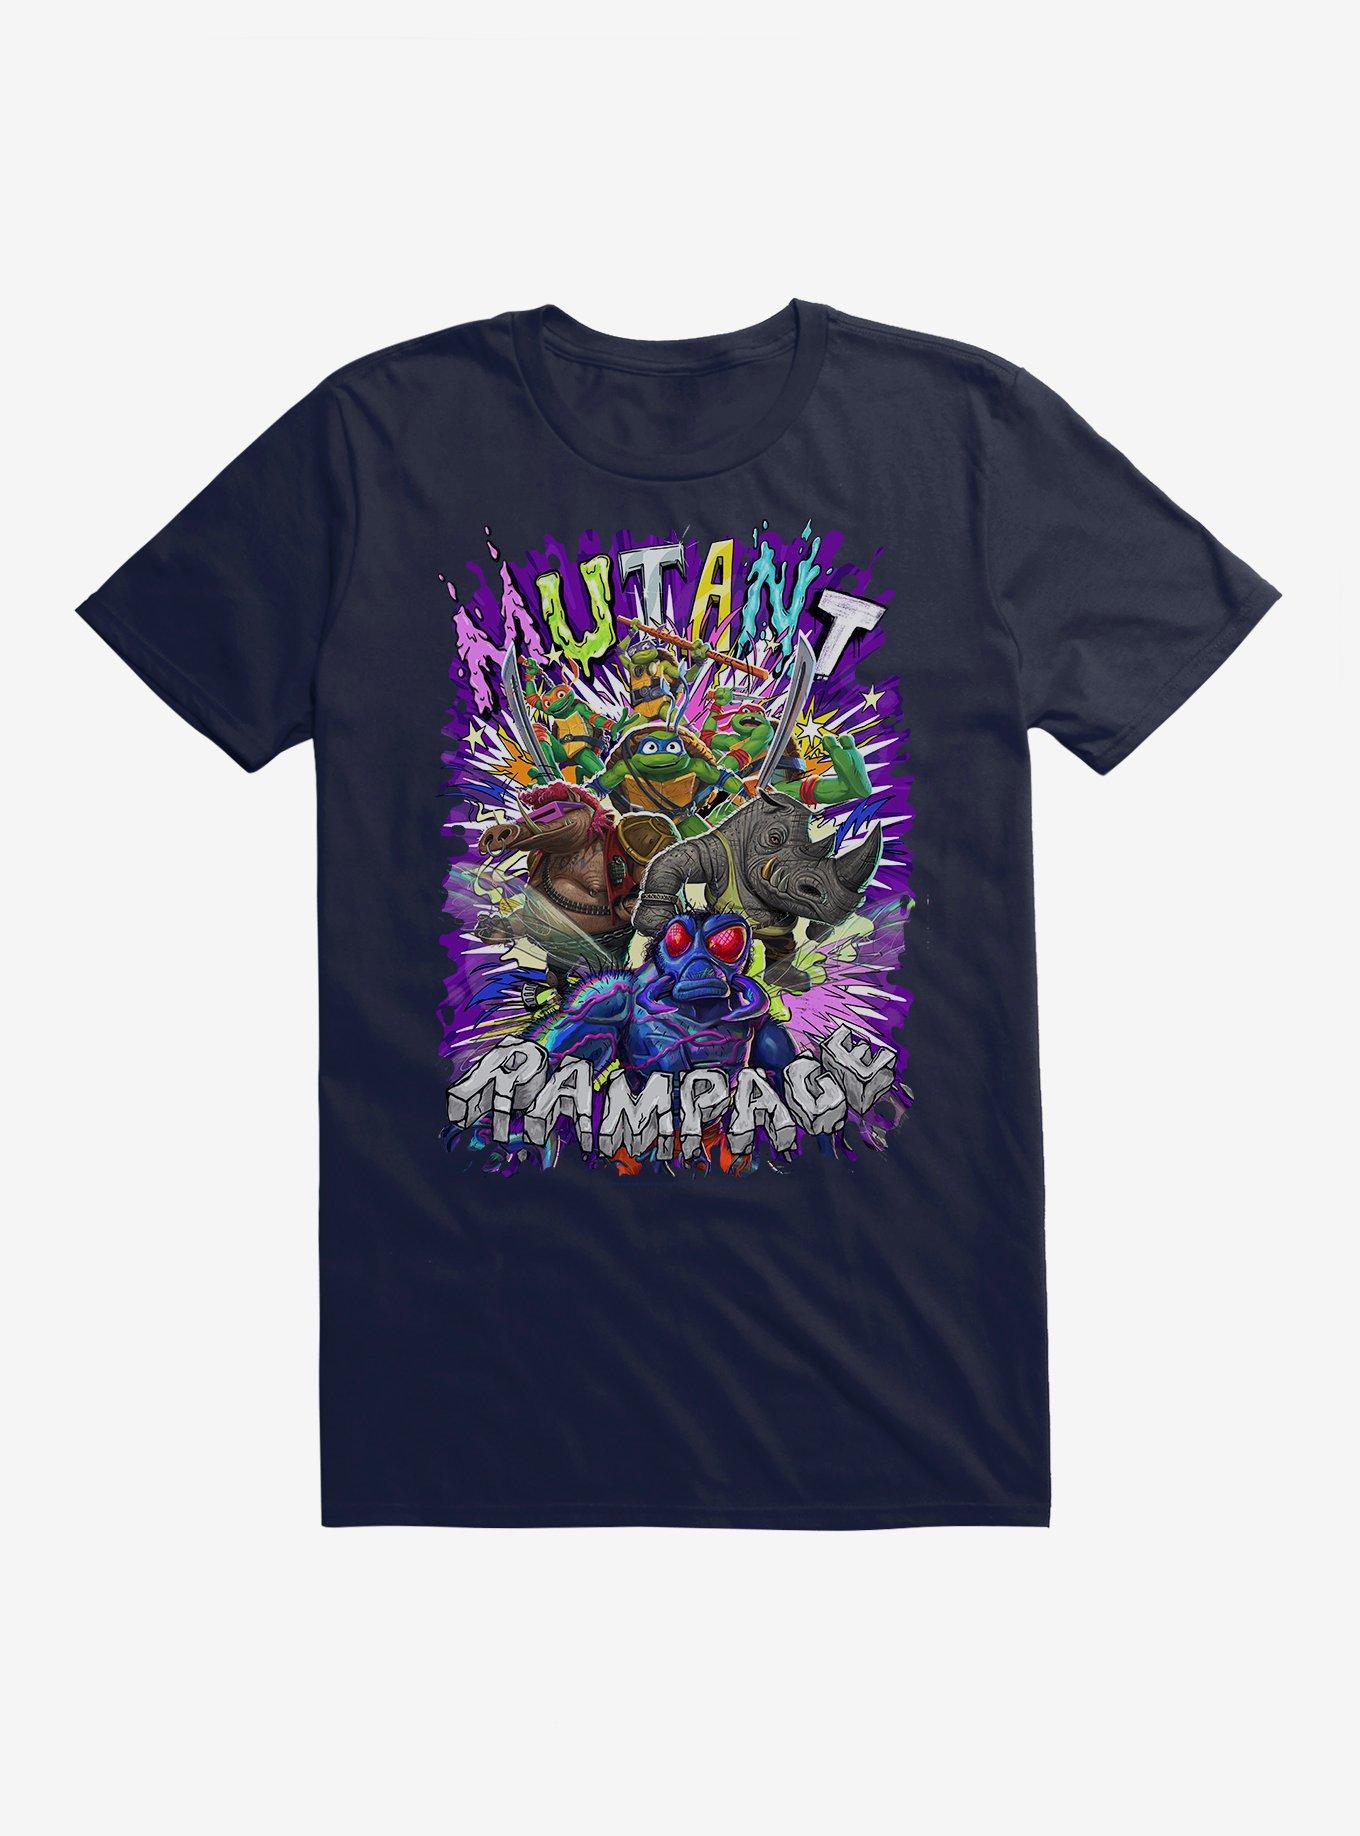 Teenage Mutant Ninja Turtles - Mutant Buddies - Toddler And Youth Short  Sleeve Graphic T-Shirt 